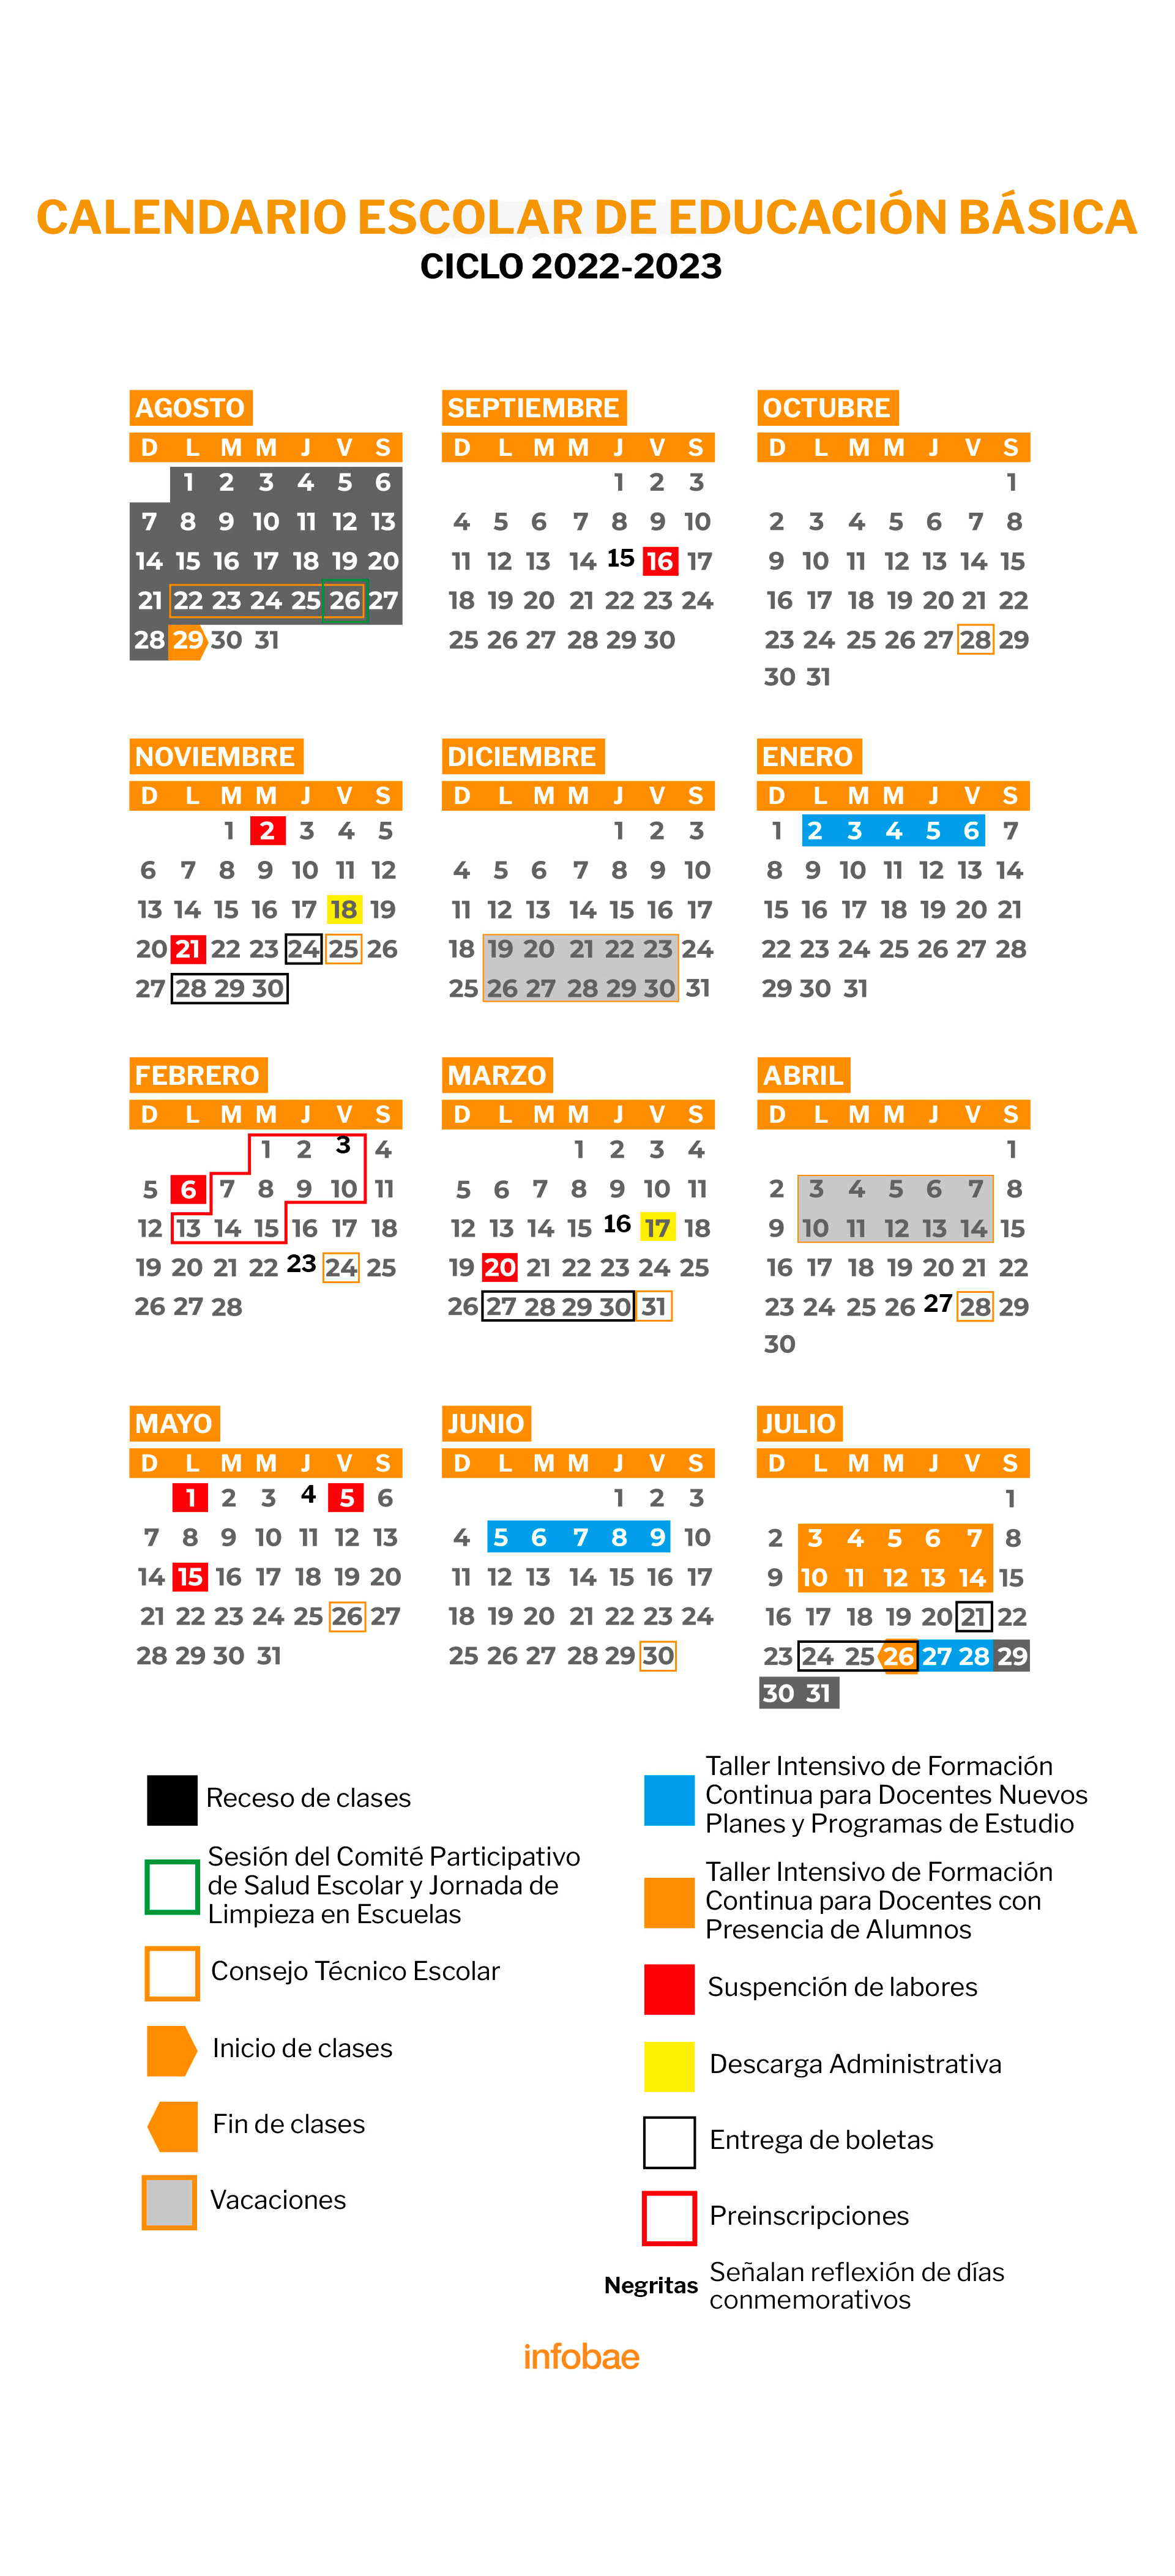 Calendario oficial de la SEP/ ciclo escolar 2022-2023. (Infobae)